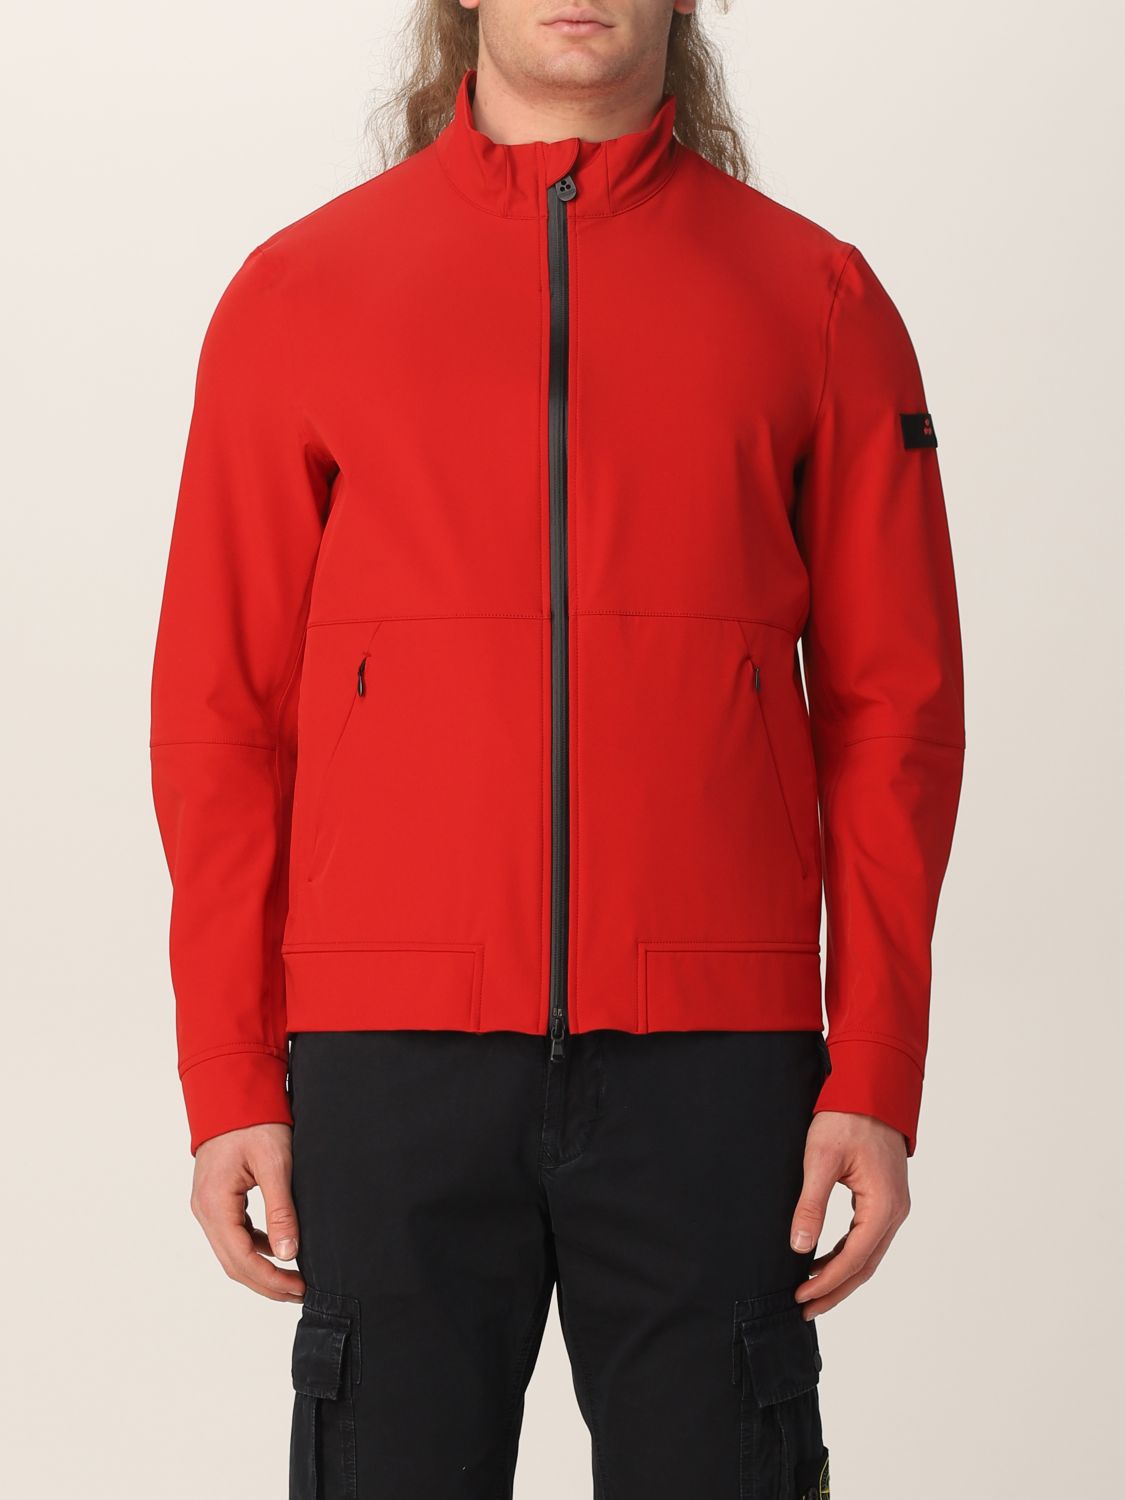 PEUTEREY: Mangole jacket in stretch nylon - Red | Peuterey jacket ...